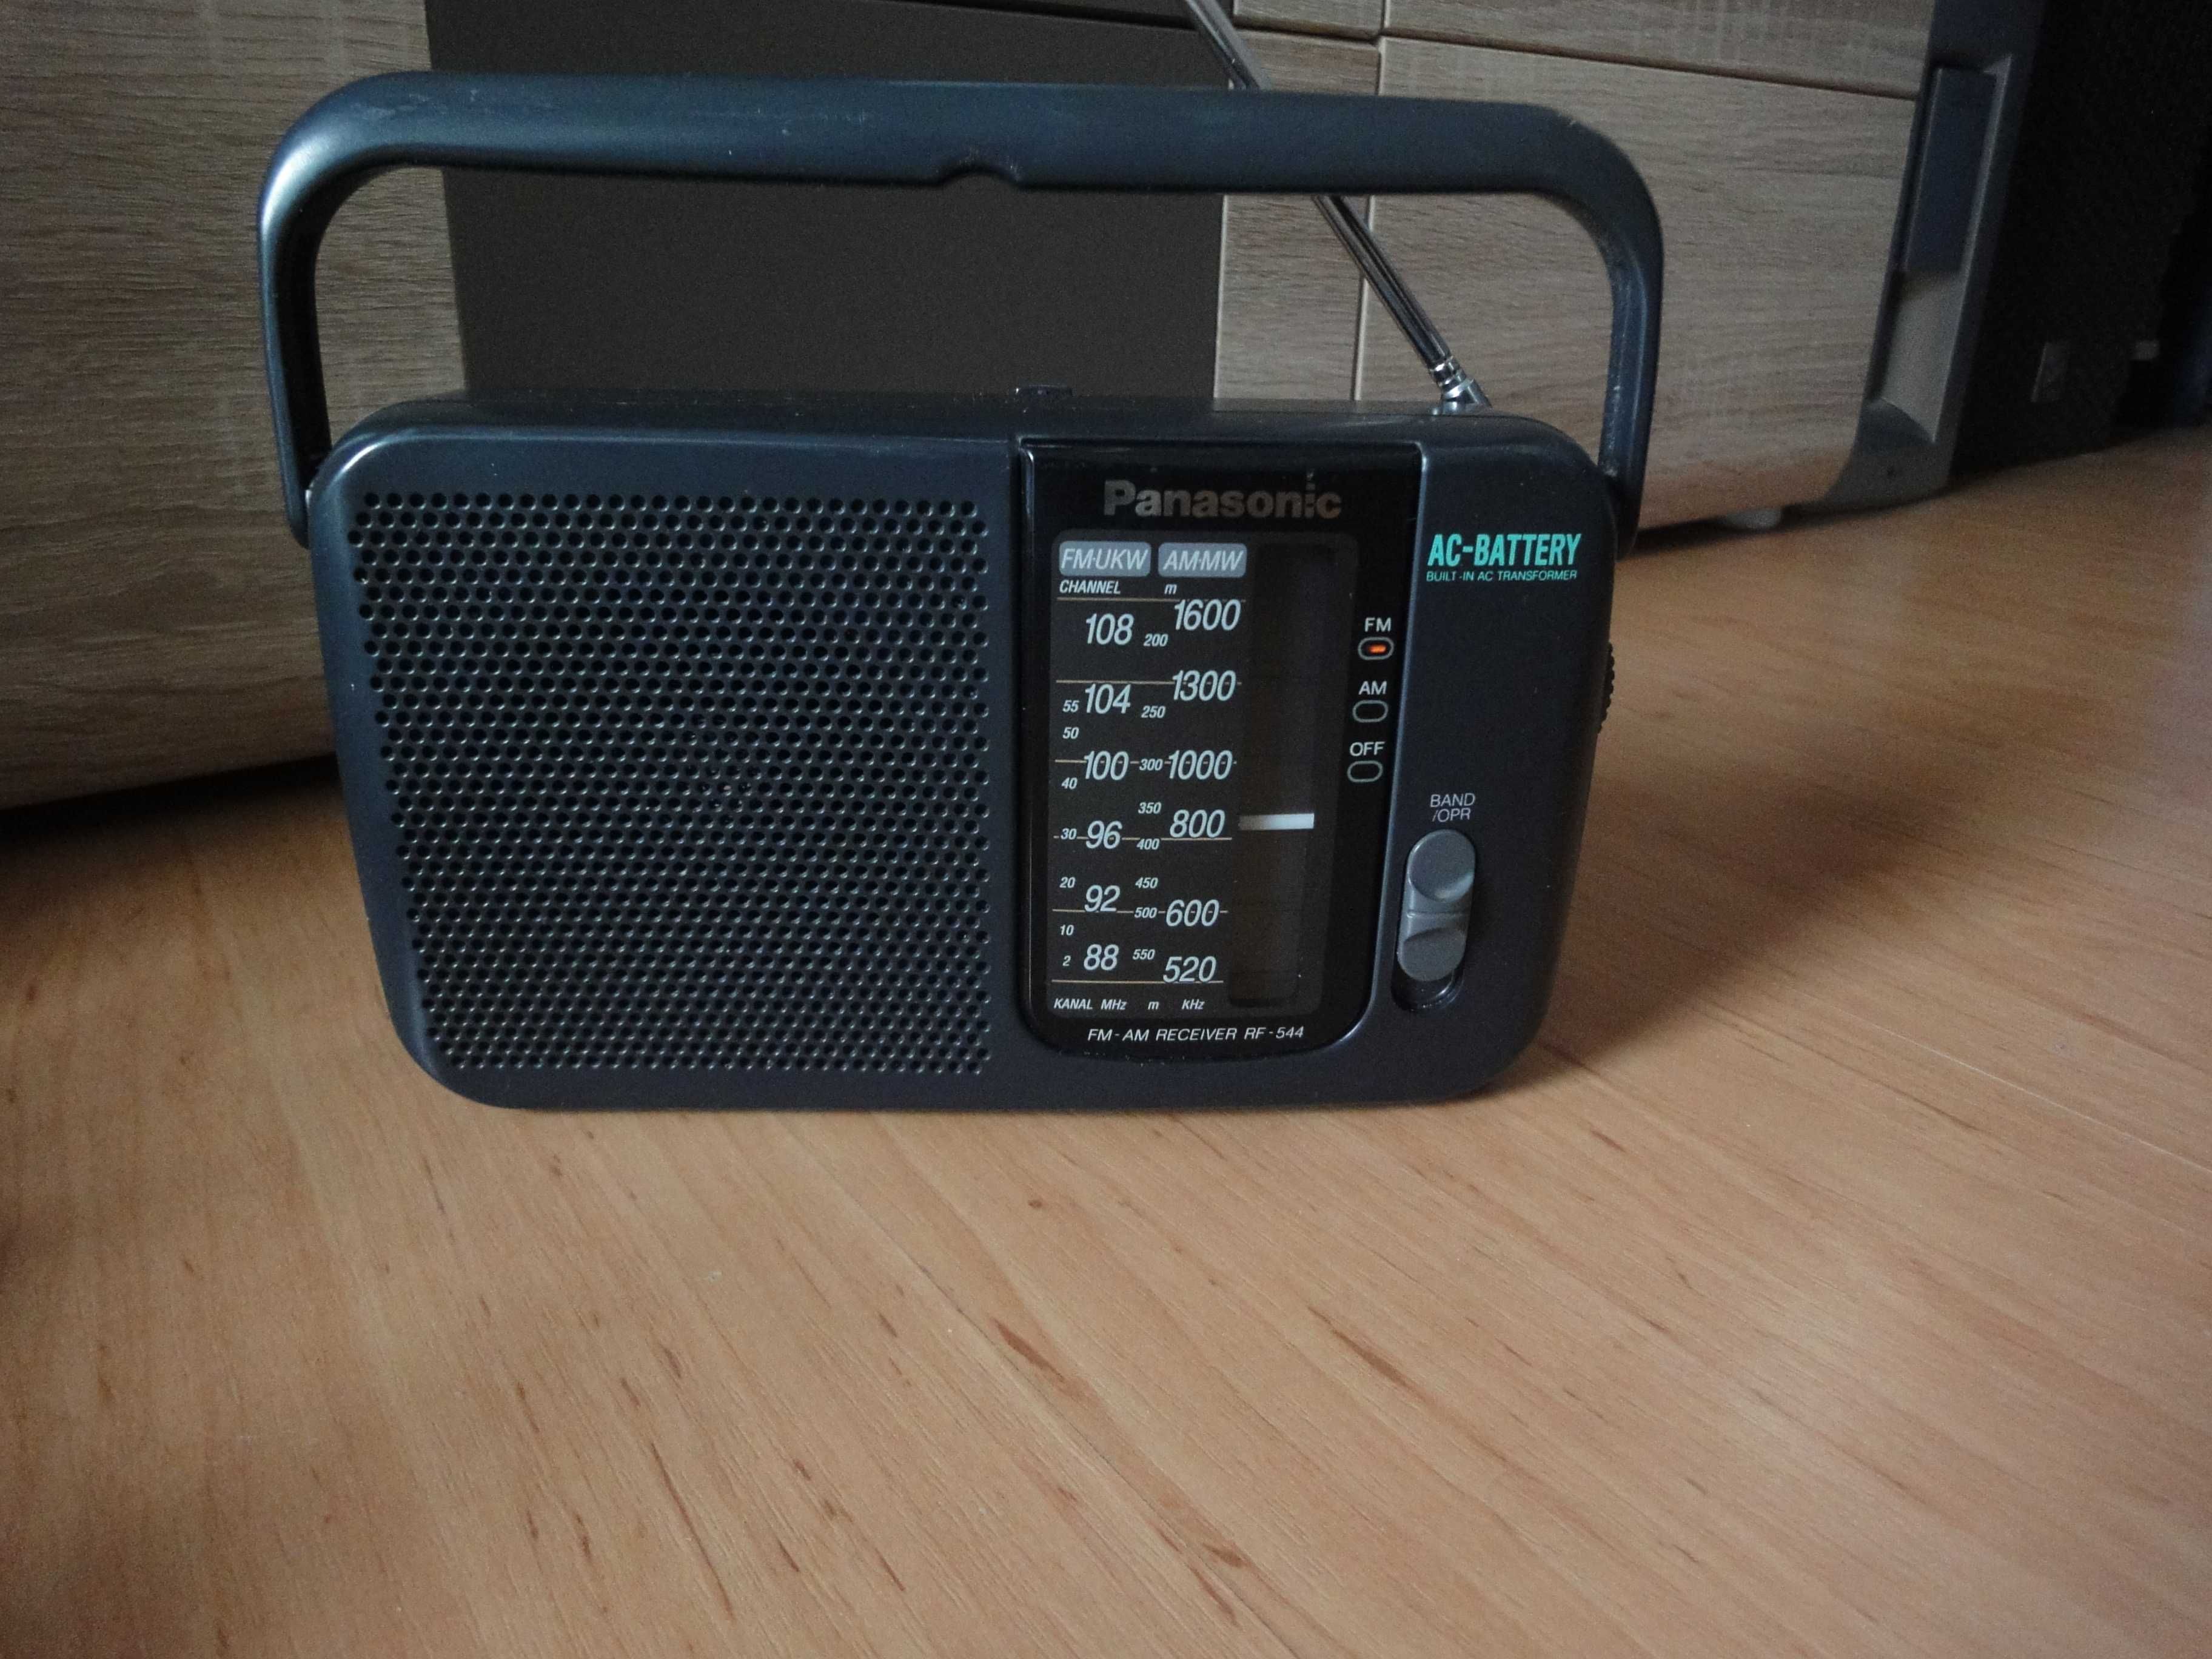 Radio Panasonic -zadbane,idealne do kuchni lub pracy